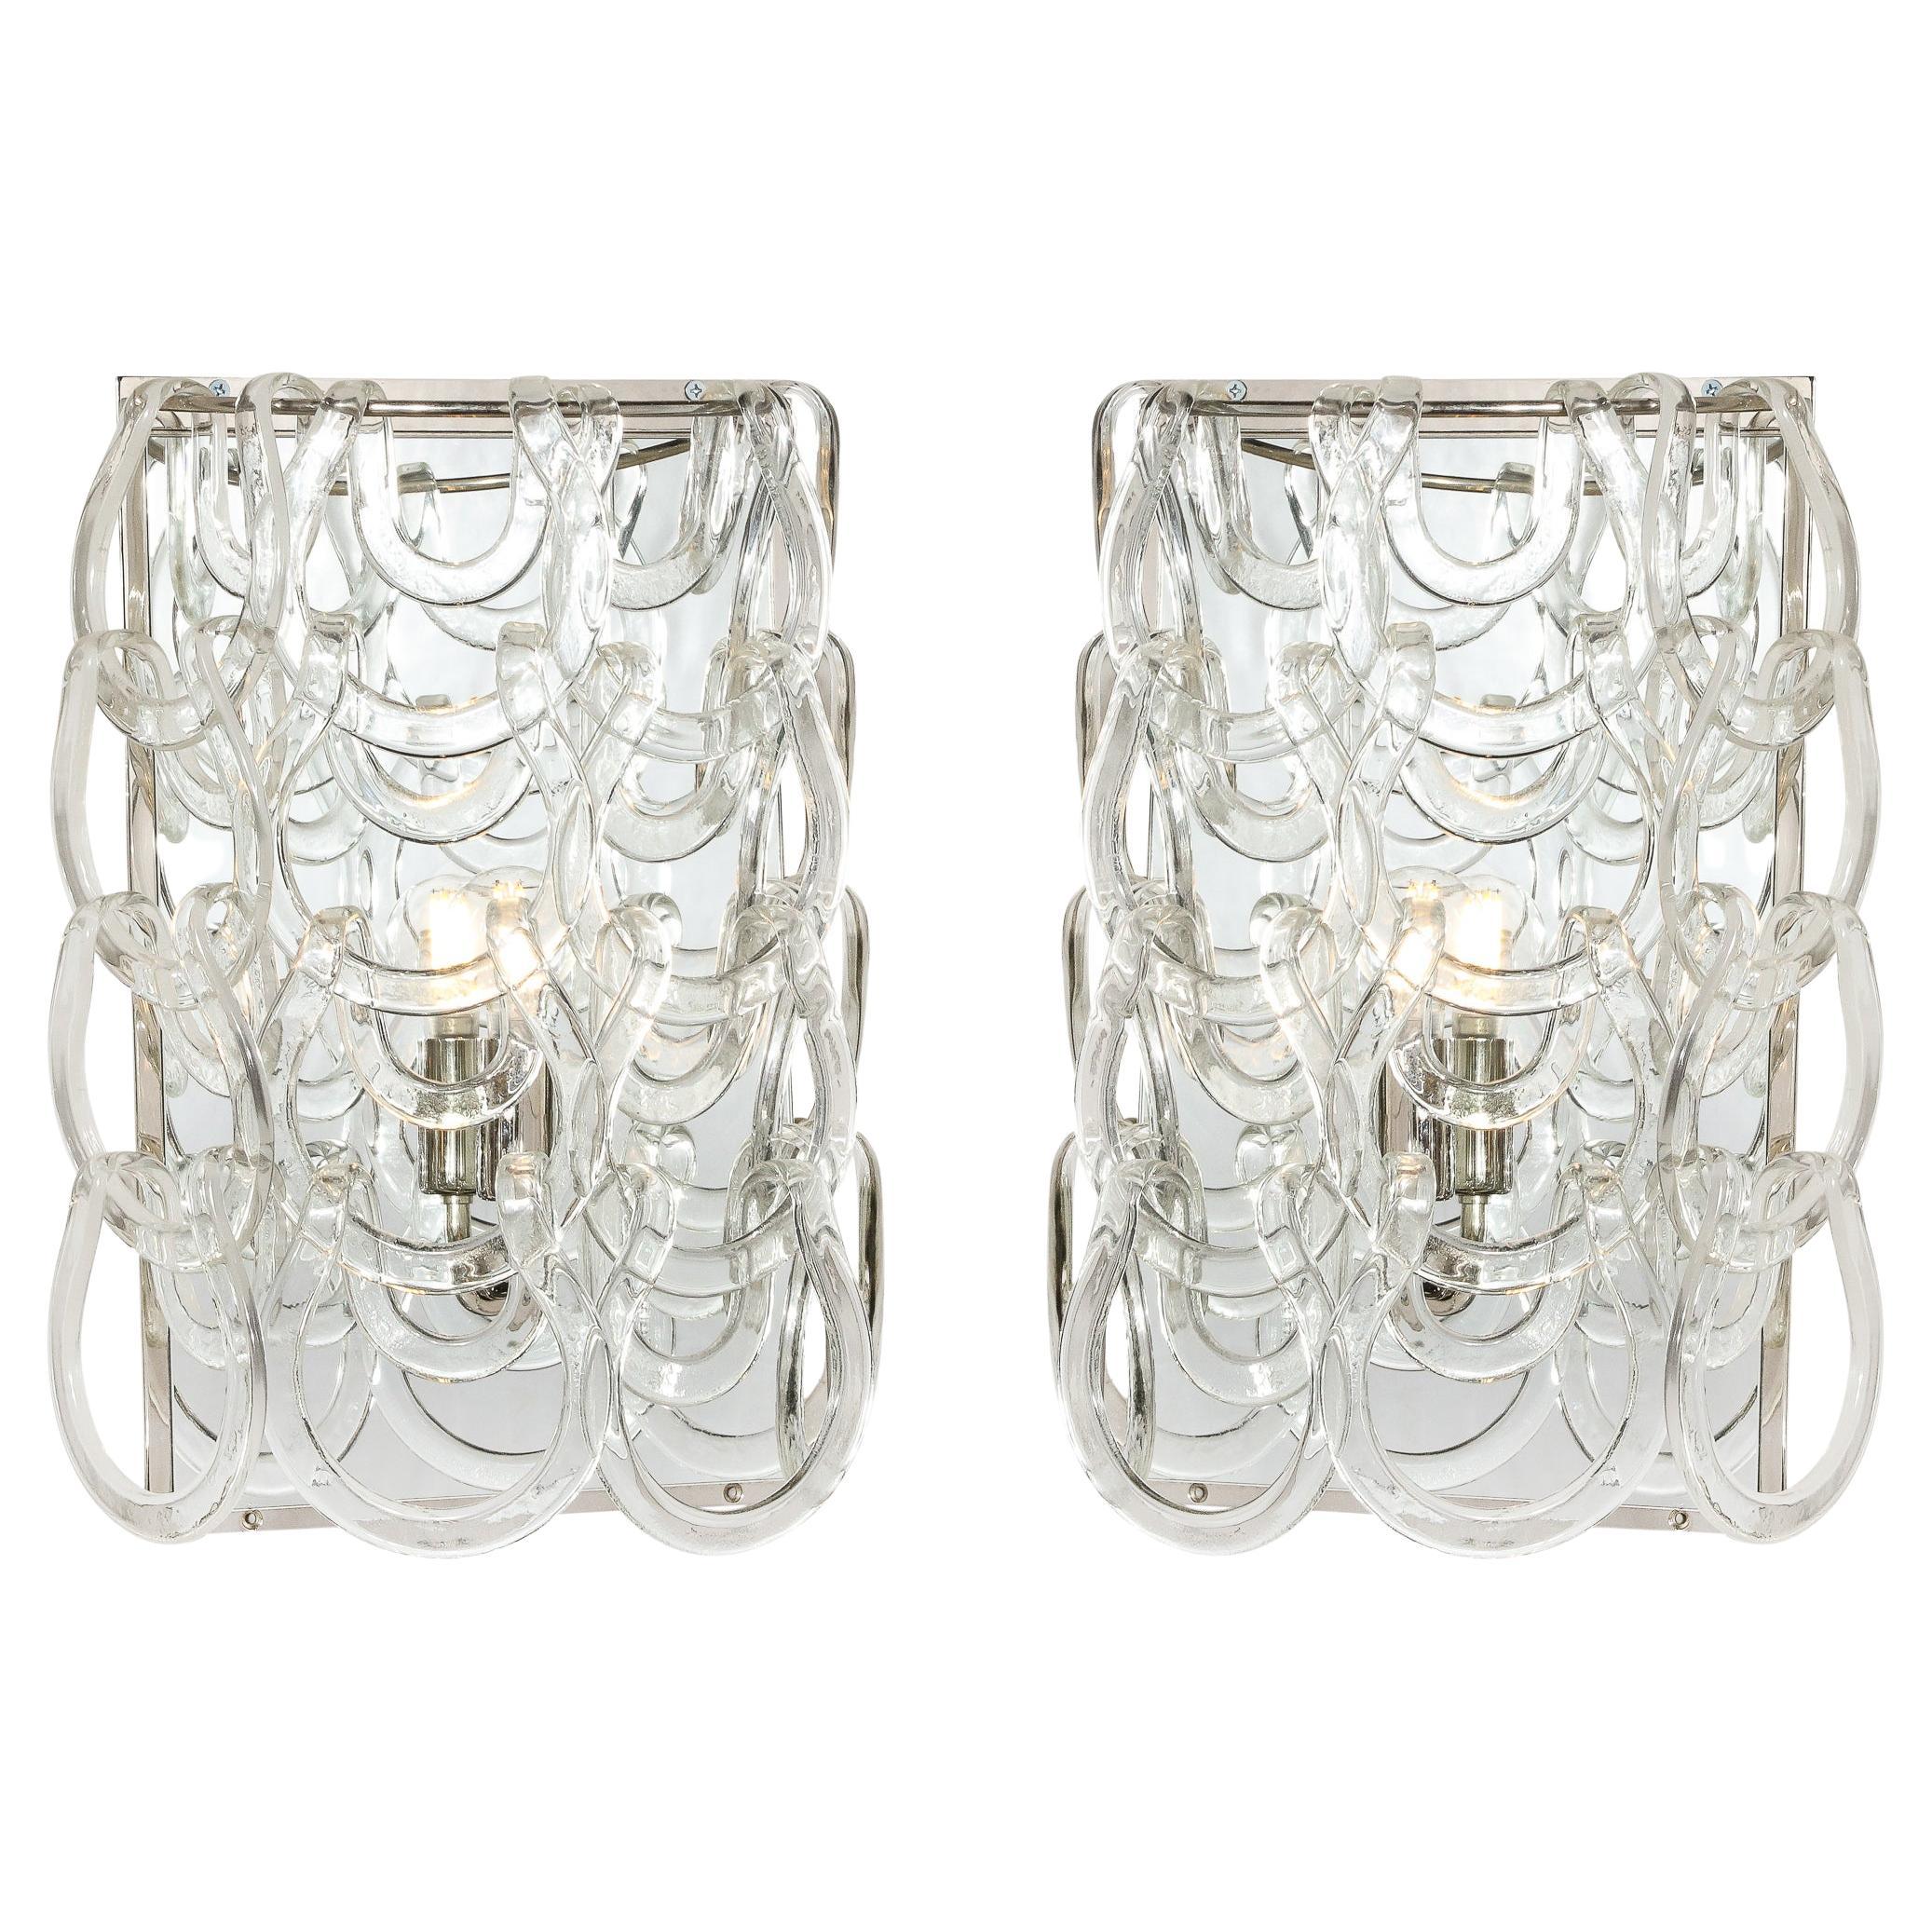 Pair of Handblown Murano Glass Sconces by Angelo Mangiarotti for Vistosi